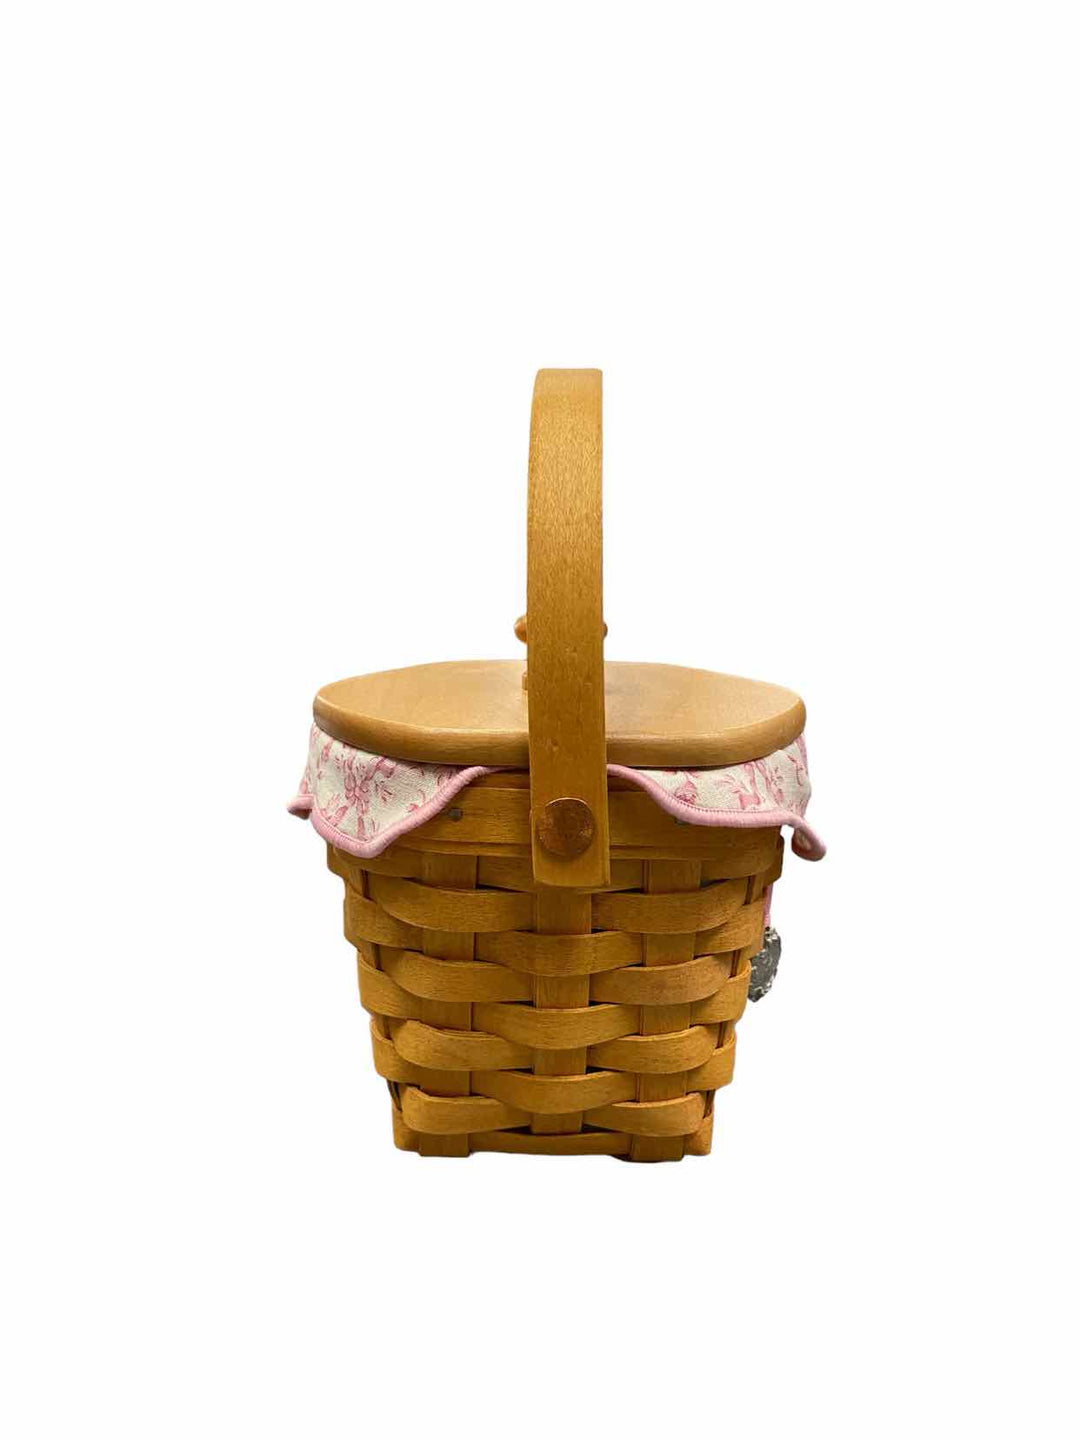 Longaberger Basket With Lid W/Plastic Protector & Cloth Liner Home Decor